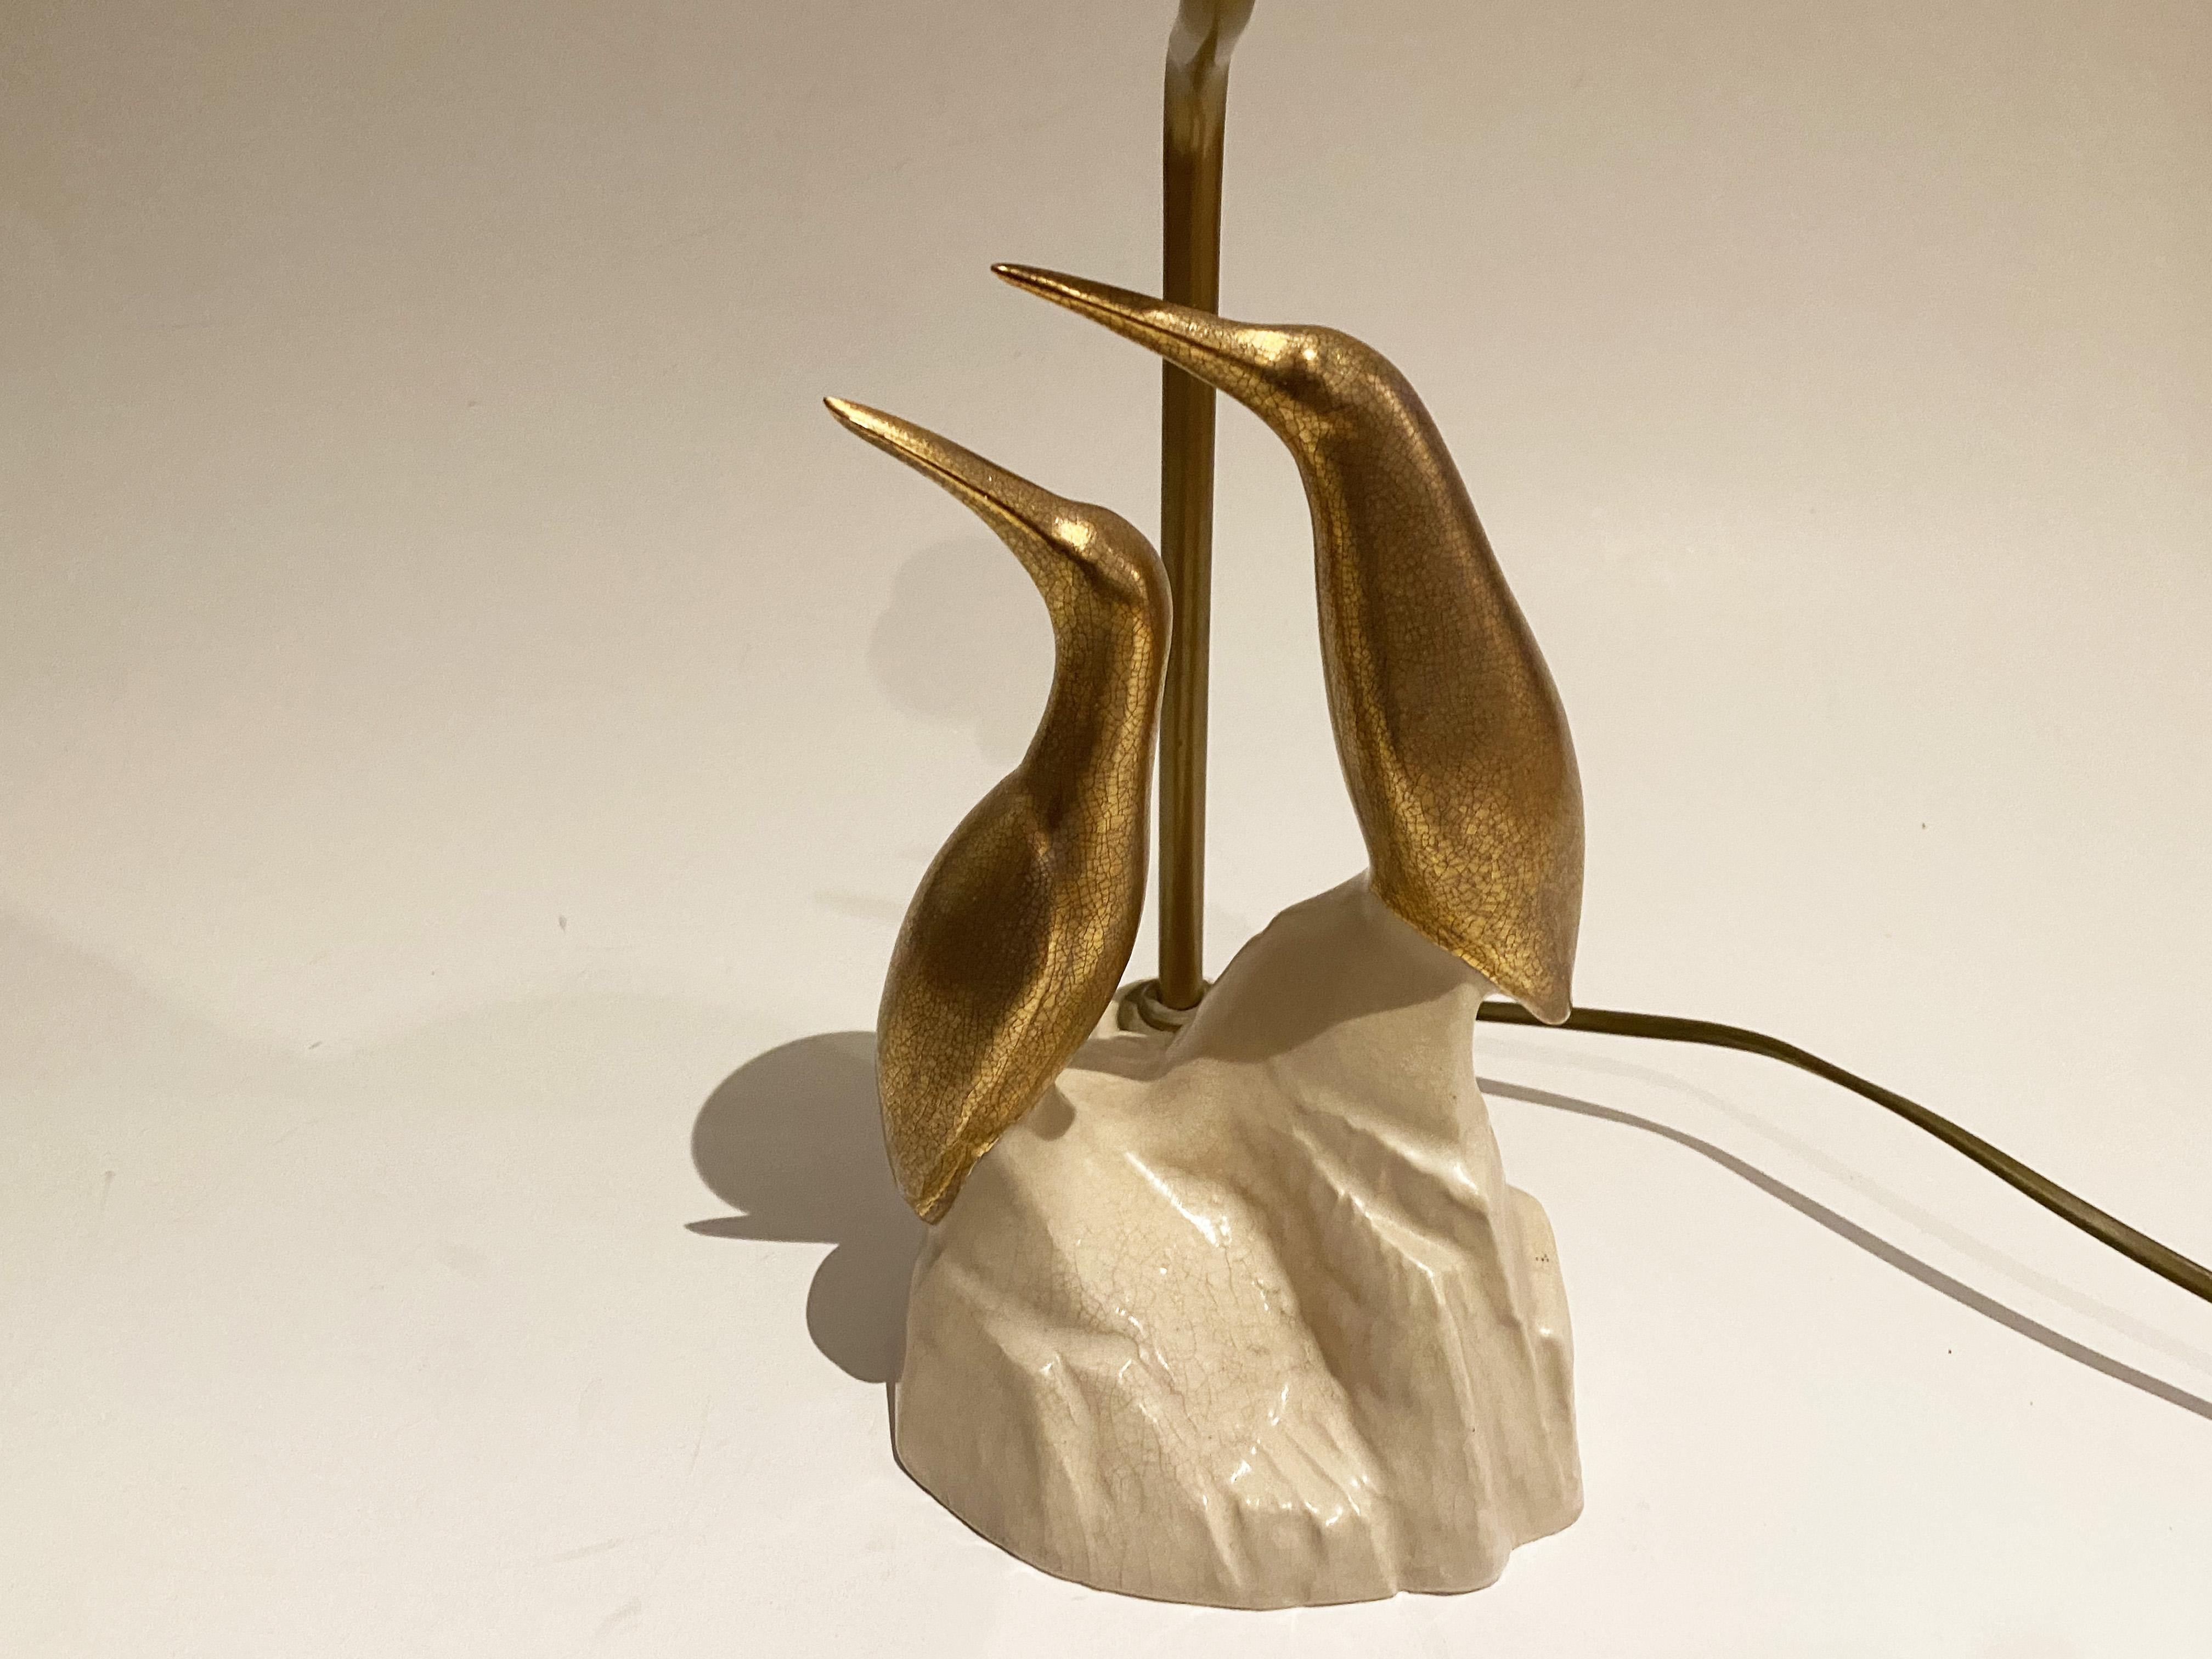 French Gilded cracked ceramic birds (penguins) lamp, art deco style, 1970s.